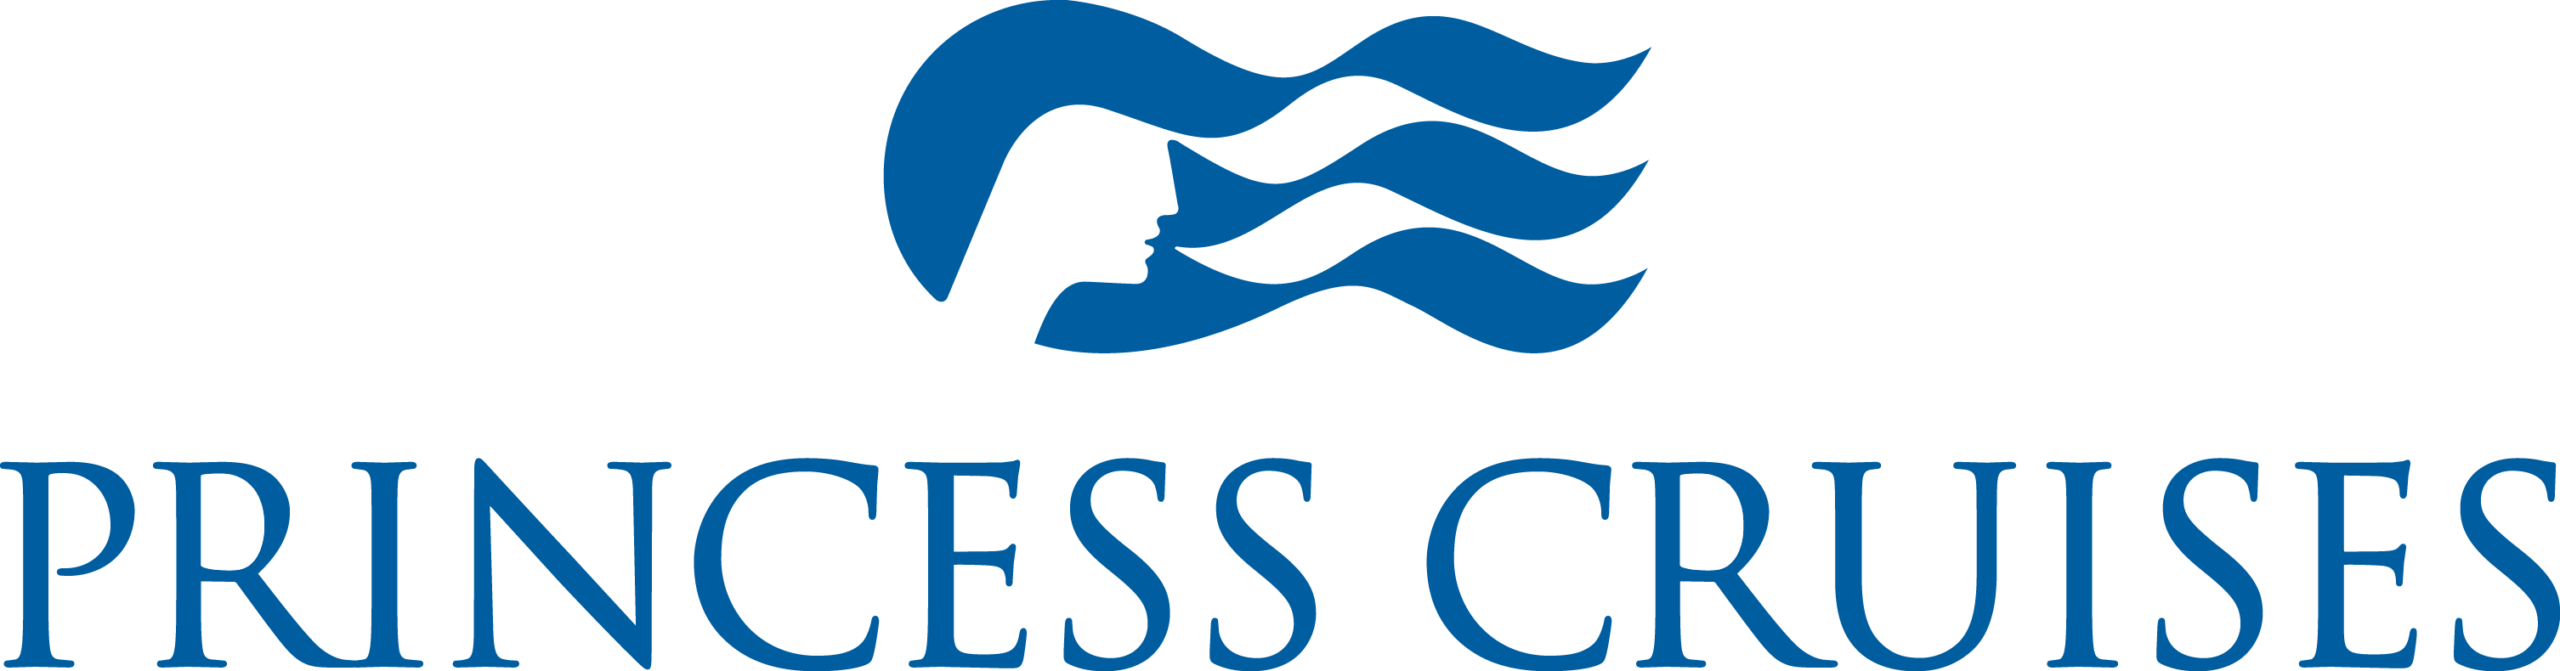 Princess_Cruises-Logo.png